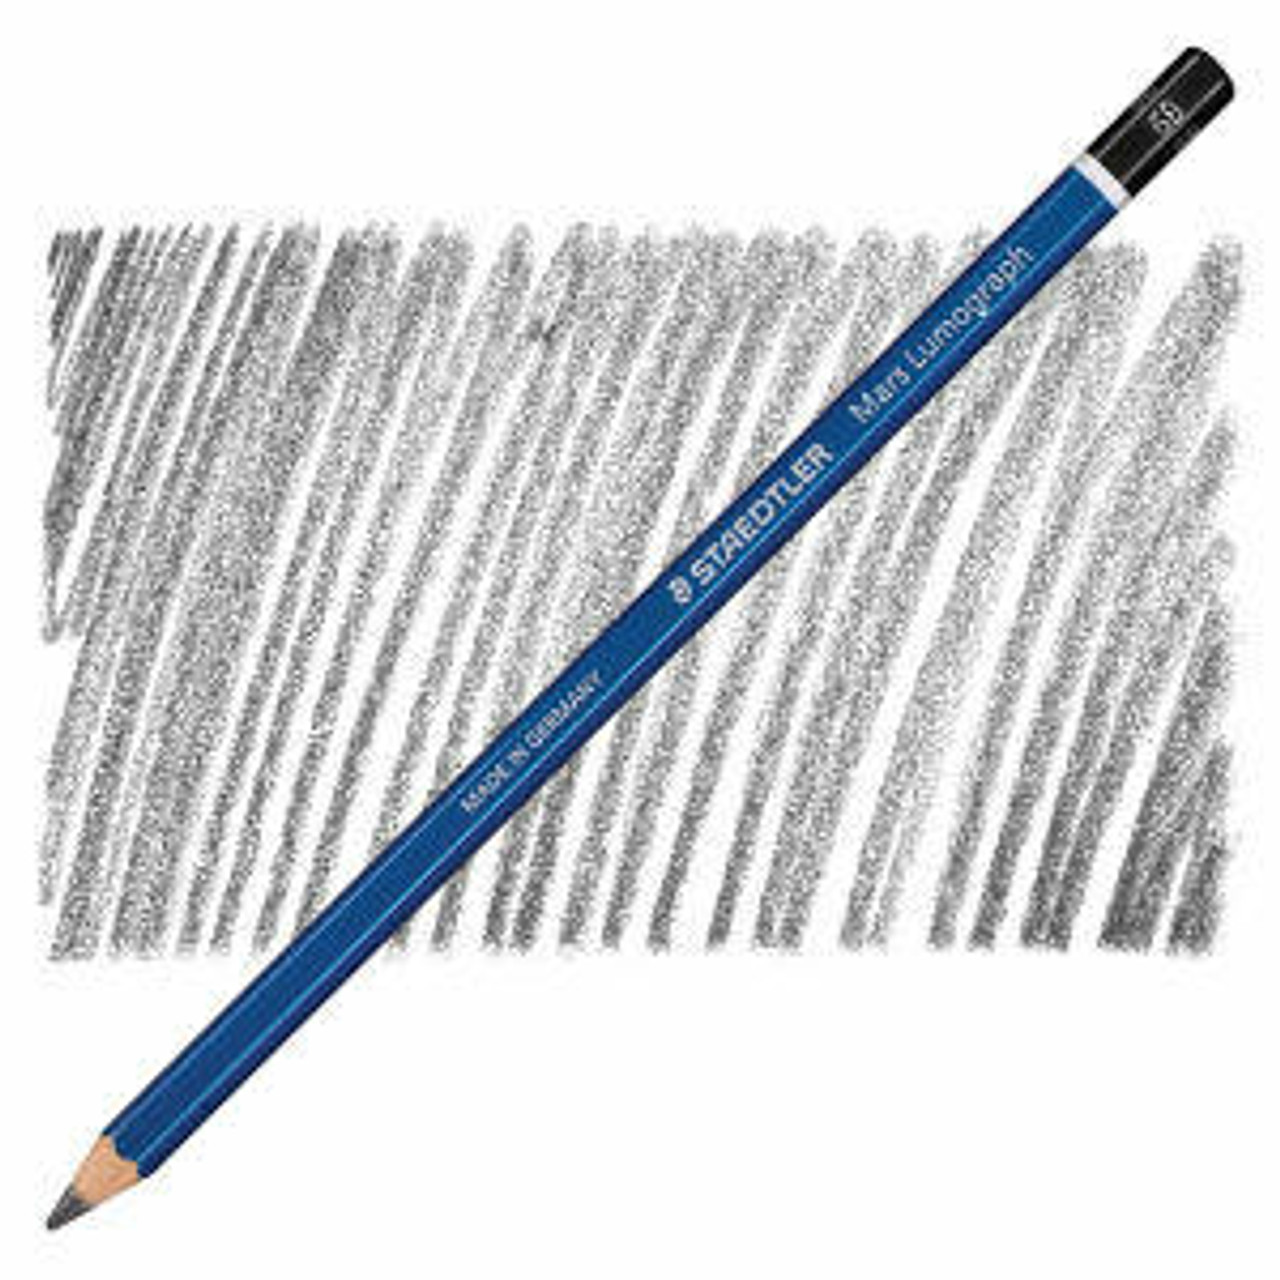 Staedtler/Mars - Lumograph Drawing Pencil - 6B